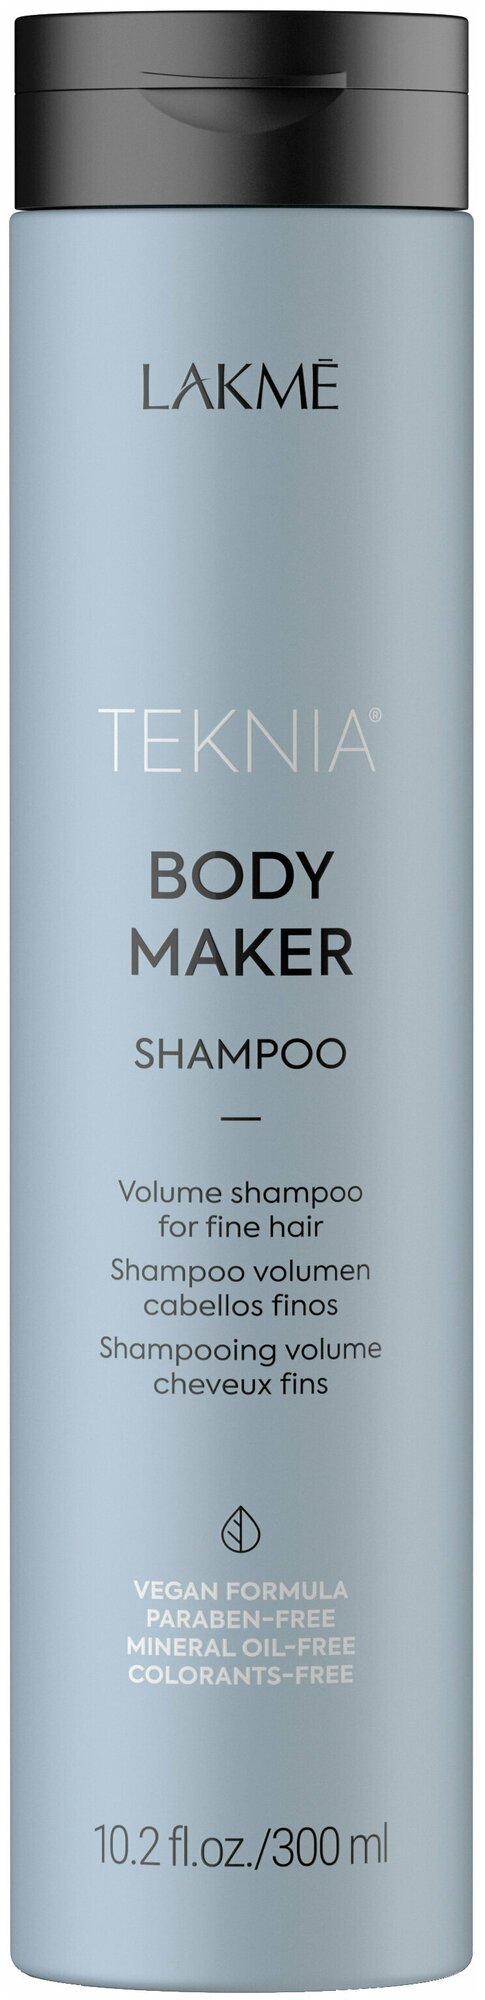 Lakme Шампунь для придания объема волосам Body maker Shampoo 300мл